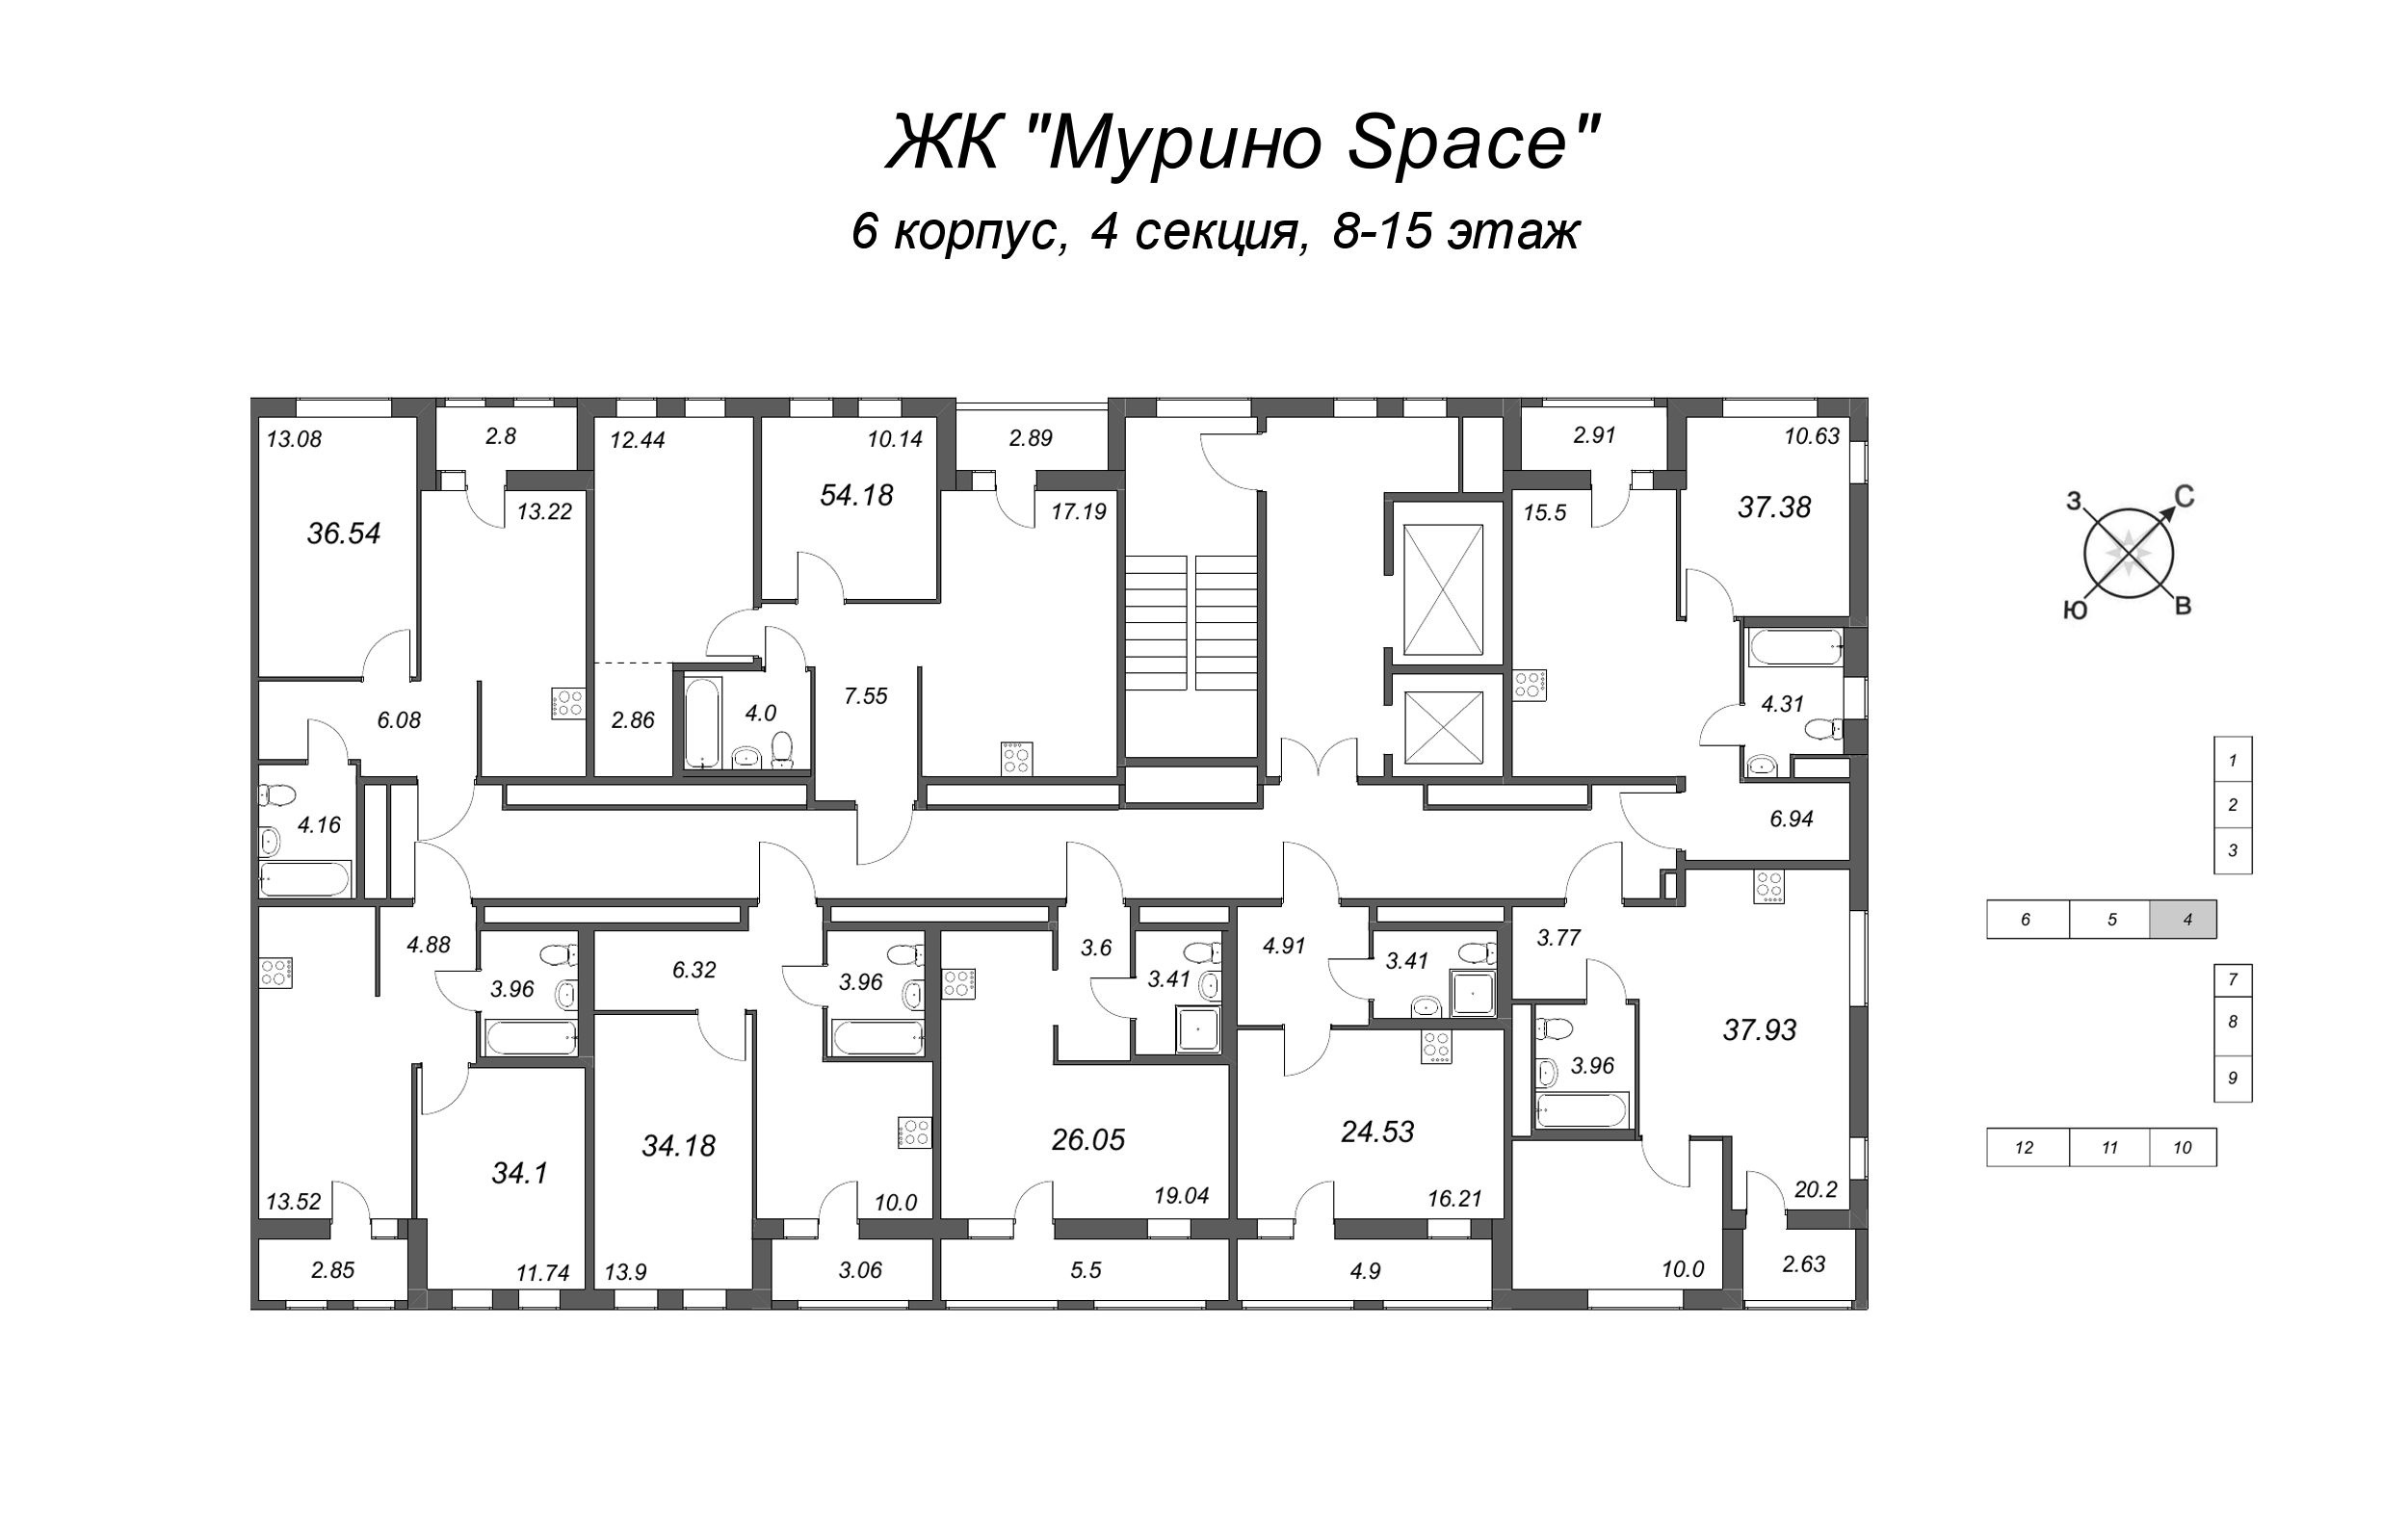 3-комнатная (Евро) квартира, 54.18 м² - планировка этажа